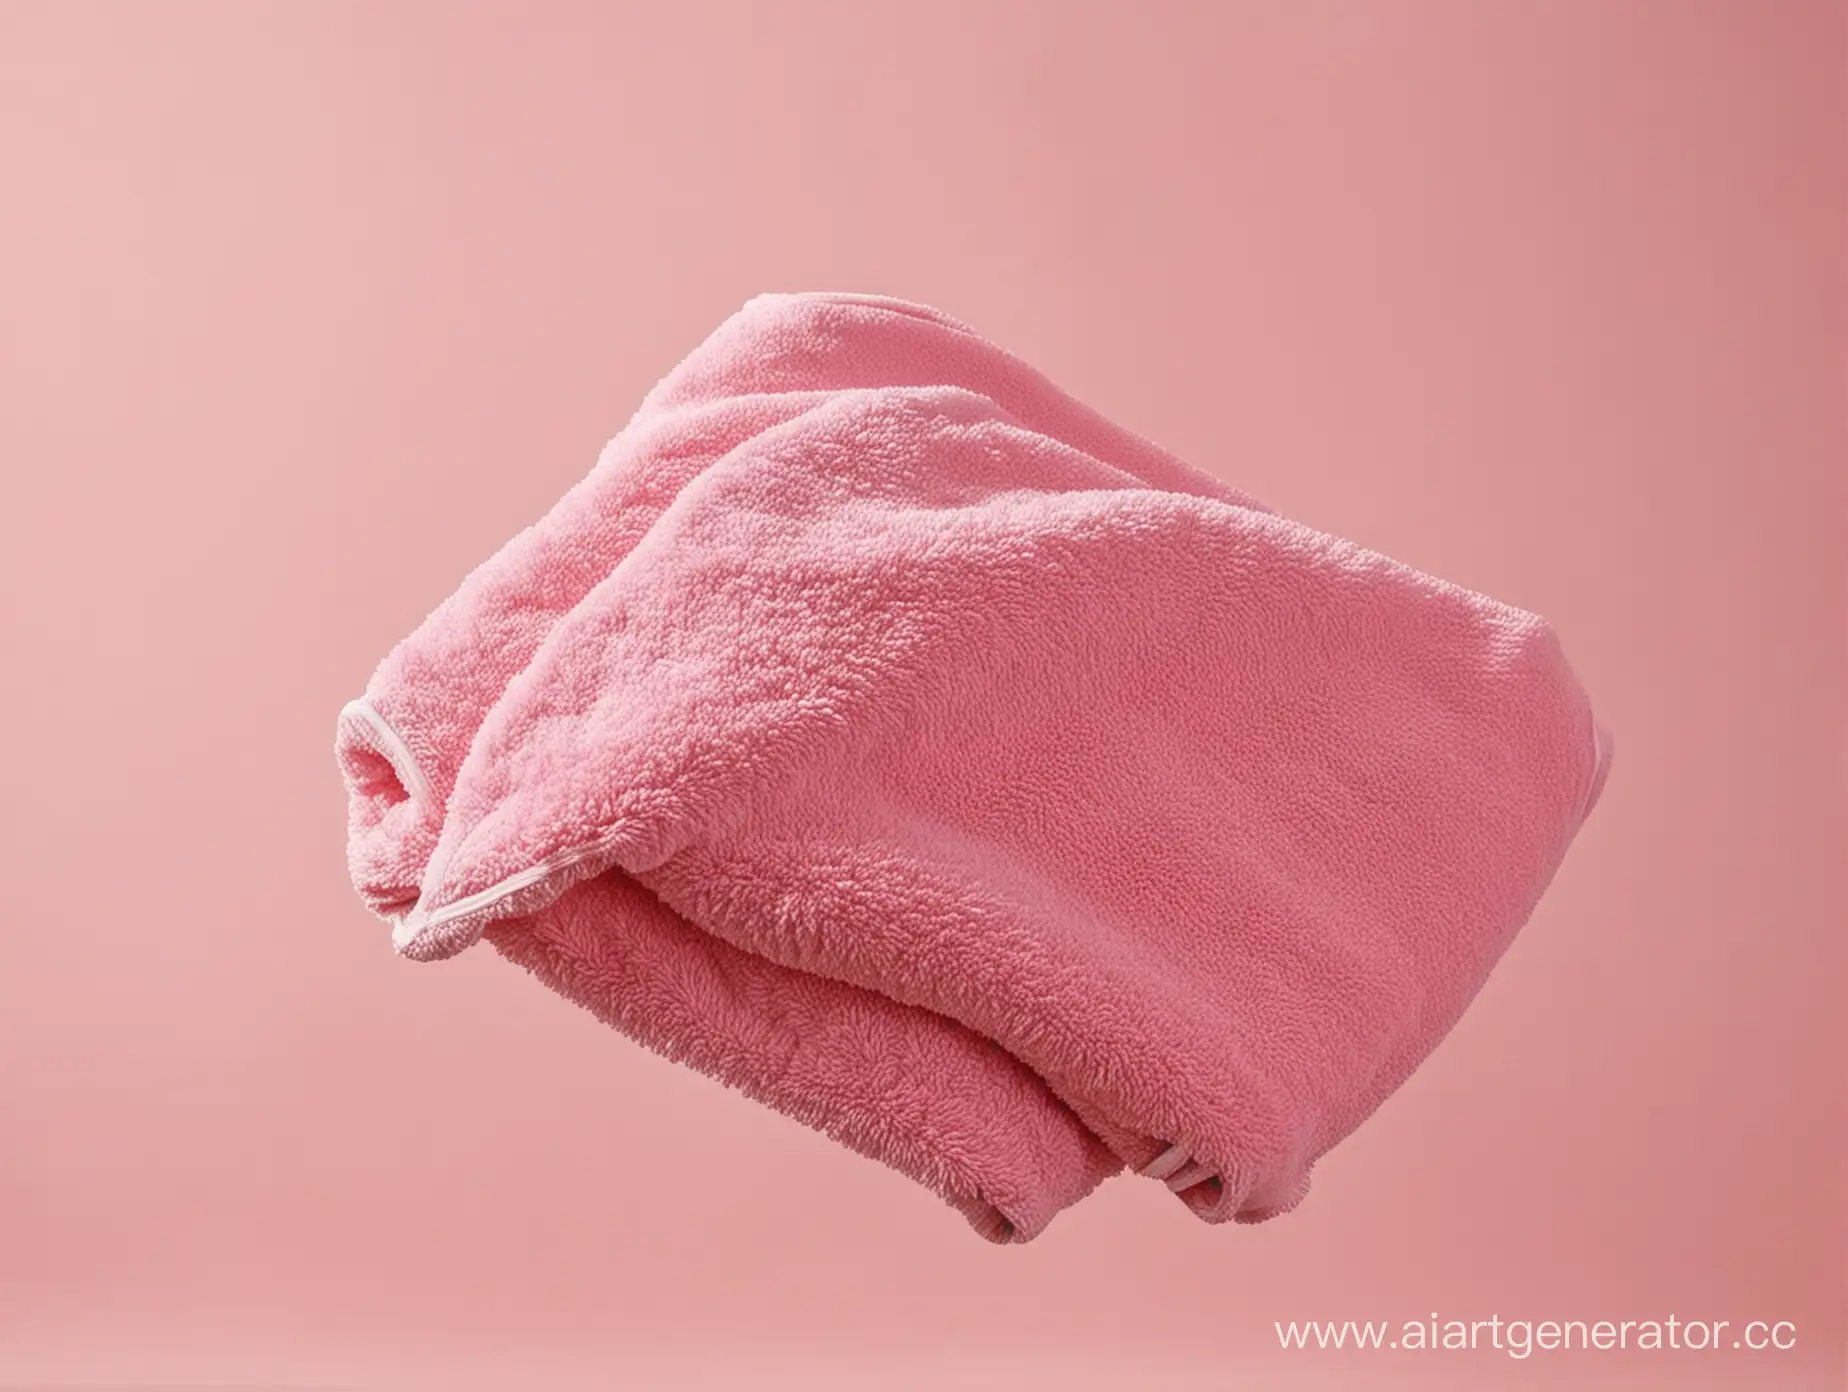 Graceful-Descent-of-a-Pink-Towel